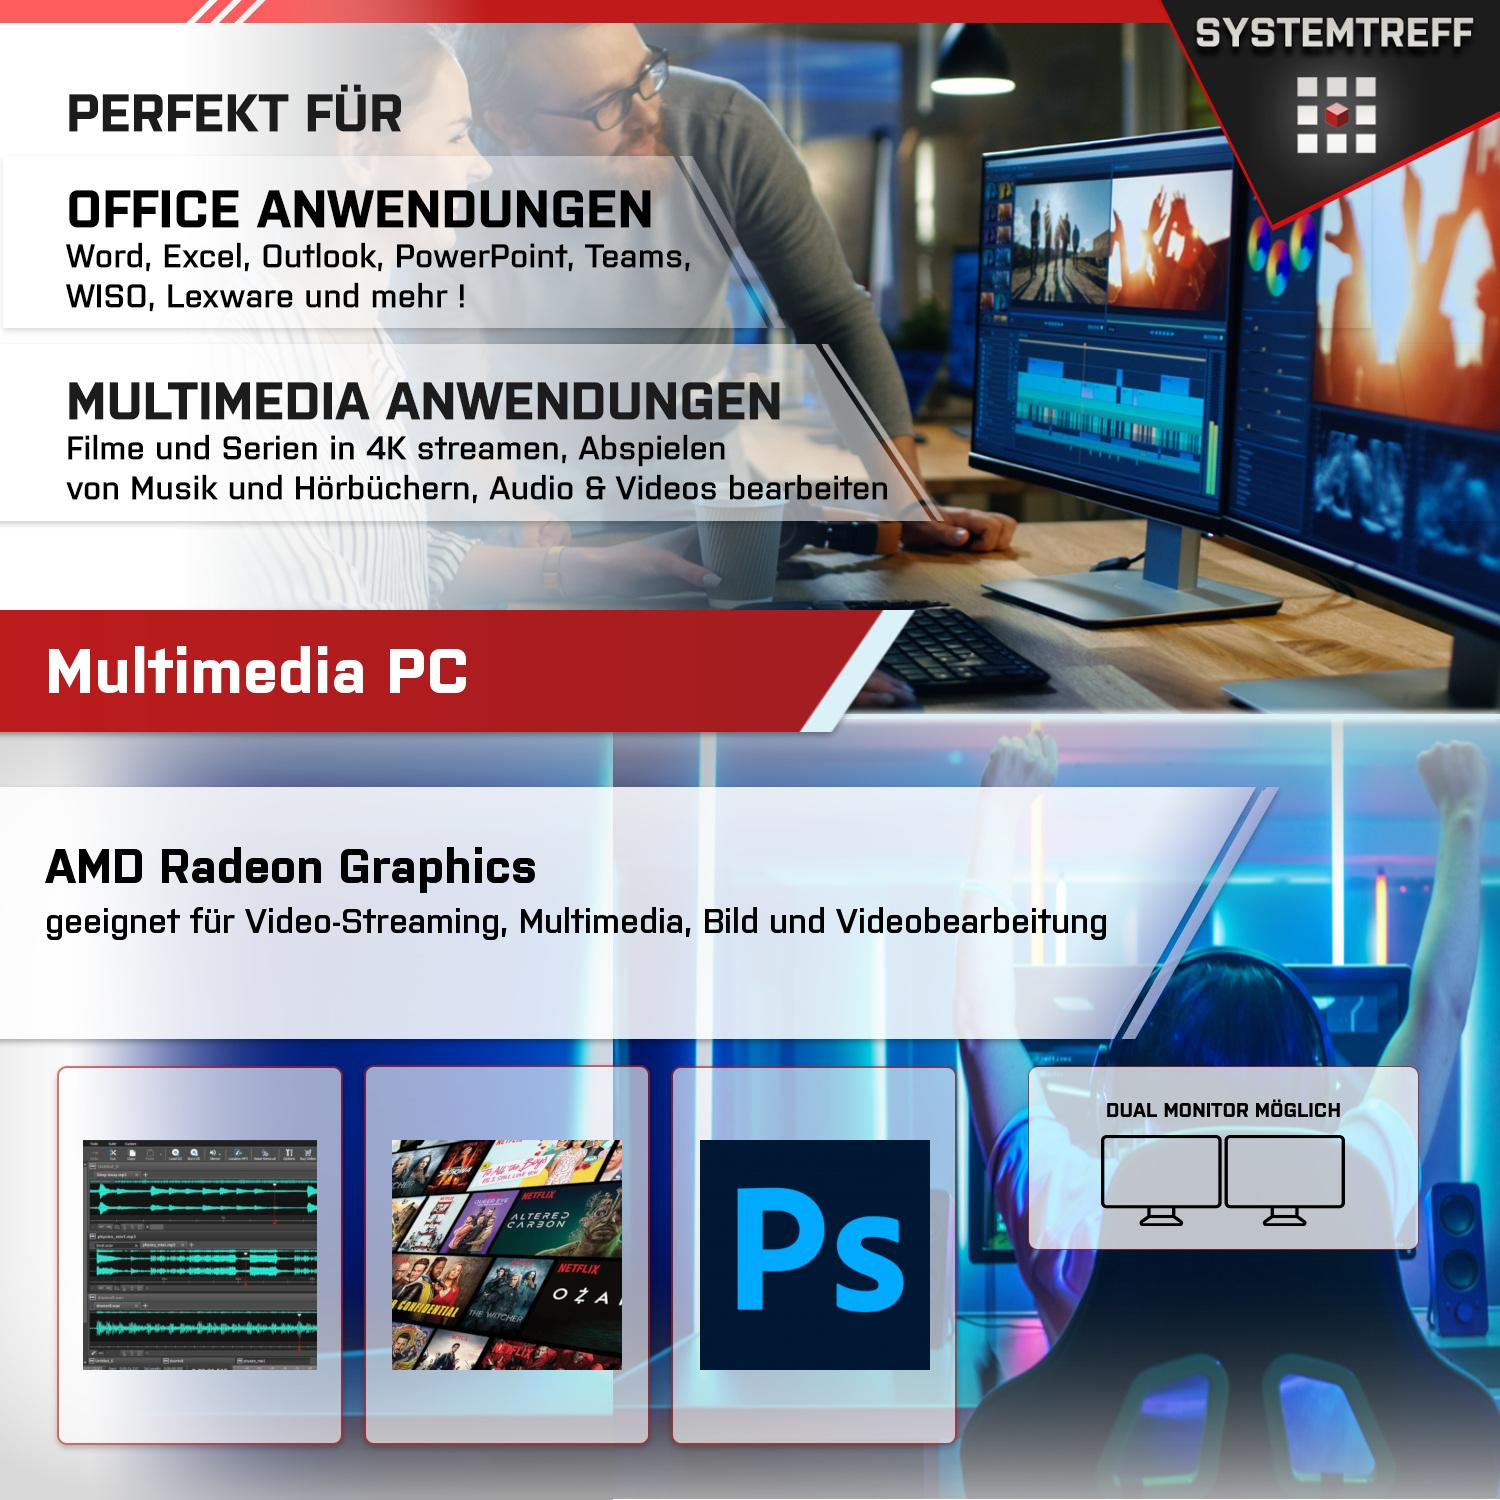 SYSTEMTREFF Office 16 GB 7600 5 2 Graphics, Komplett mit Prozessor, GB Komplett GB 7600, 512 Radeon Ryzen PC mSSD, AMD RAM, AMD